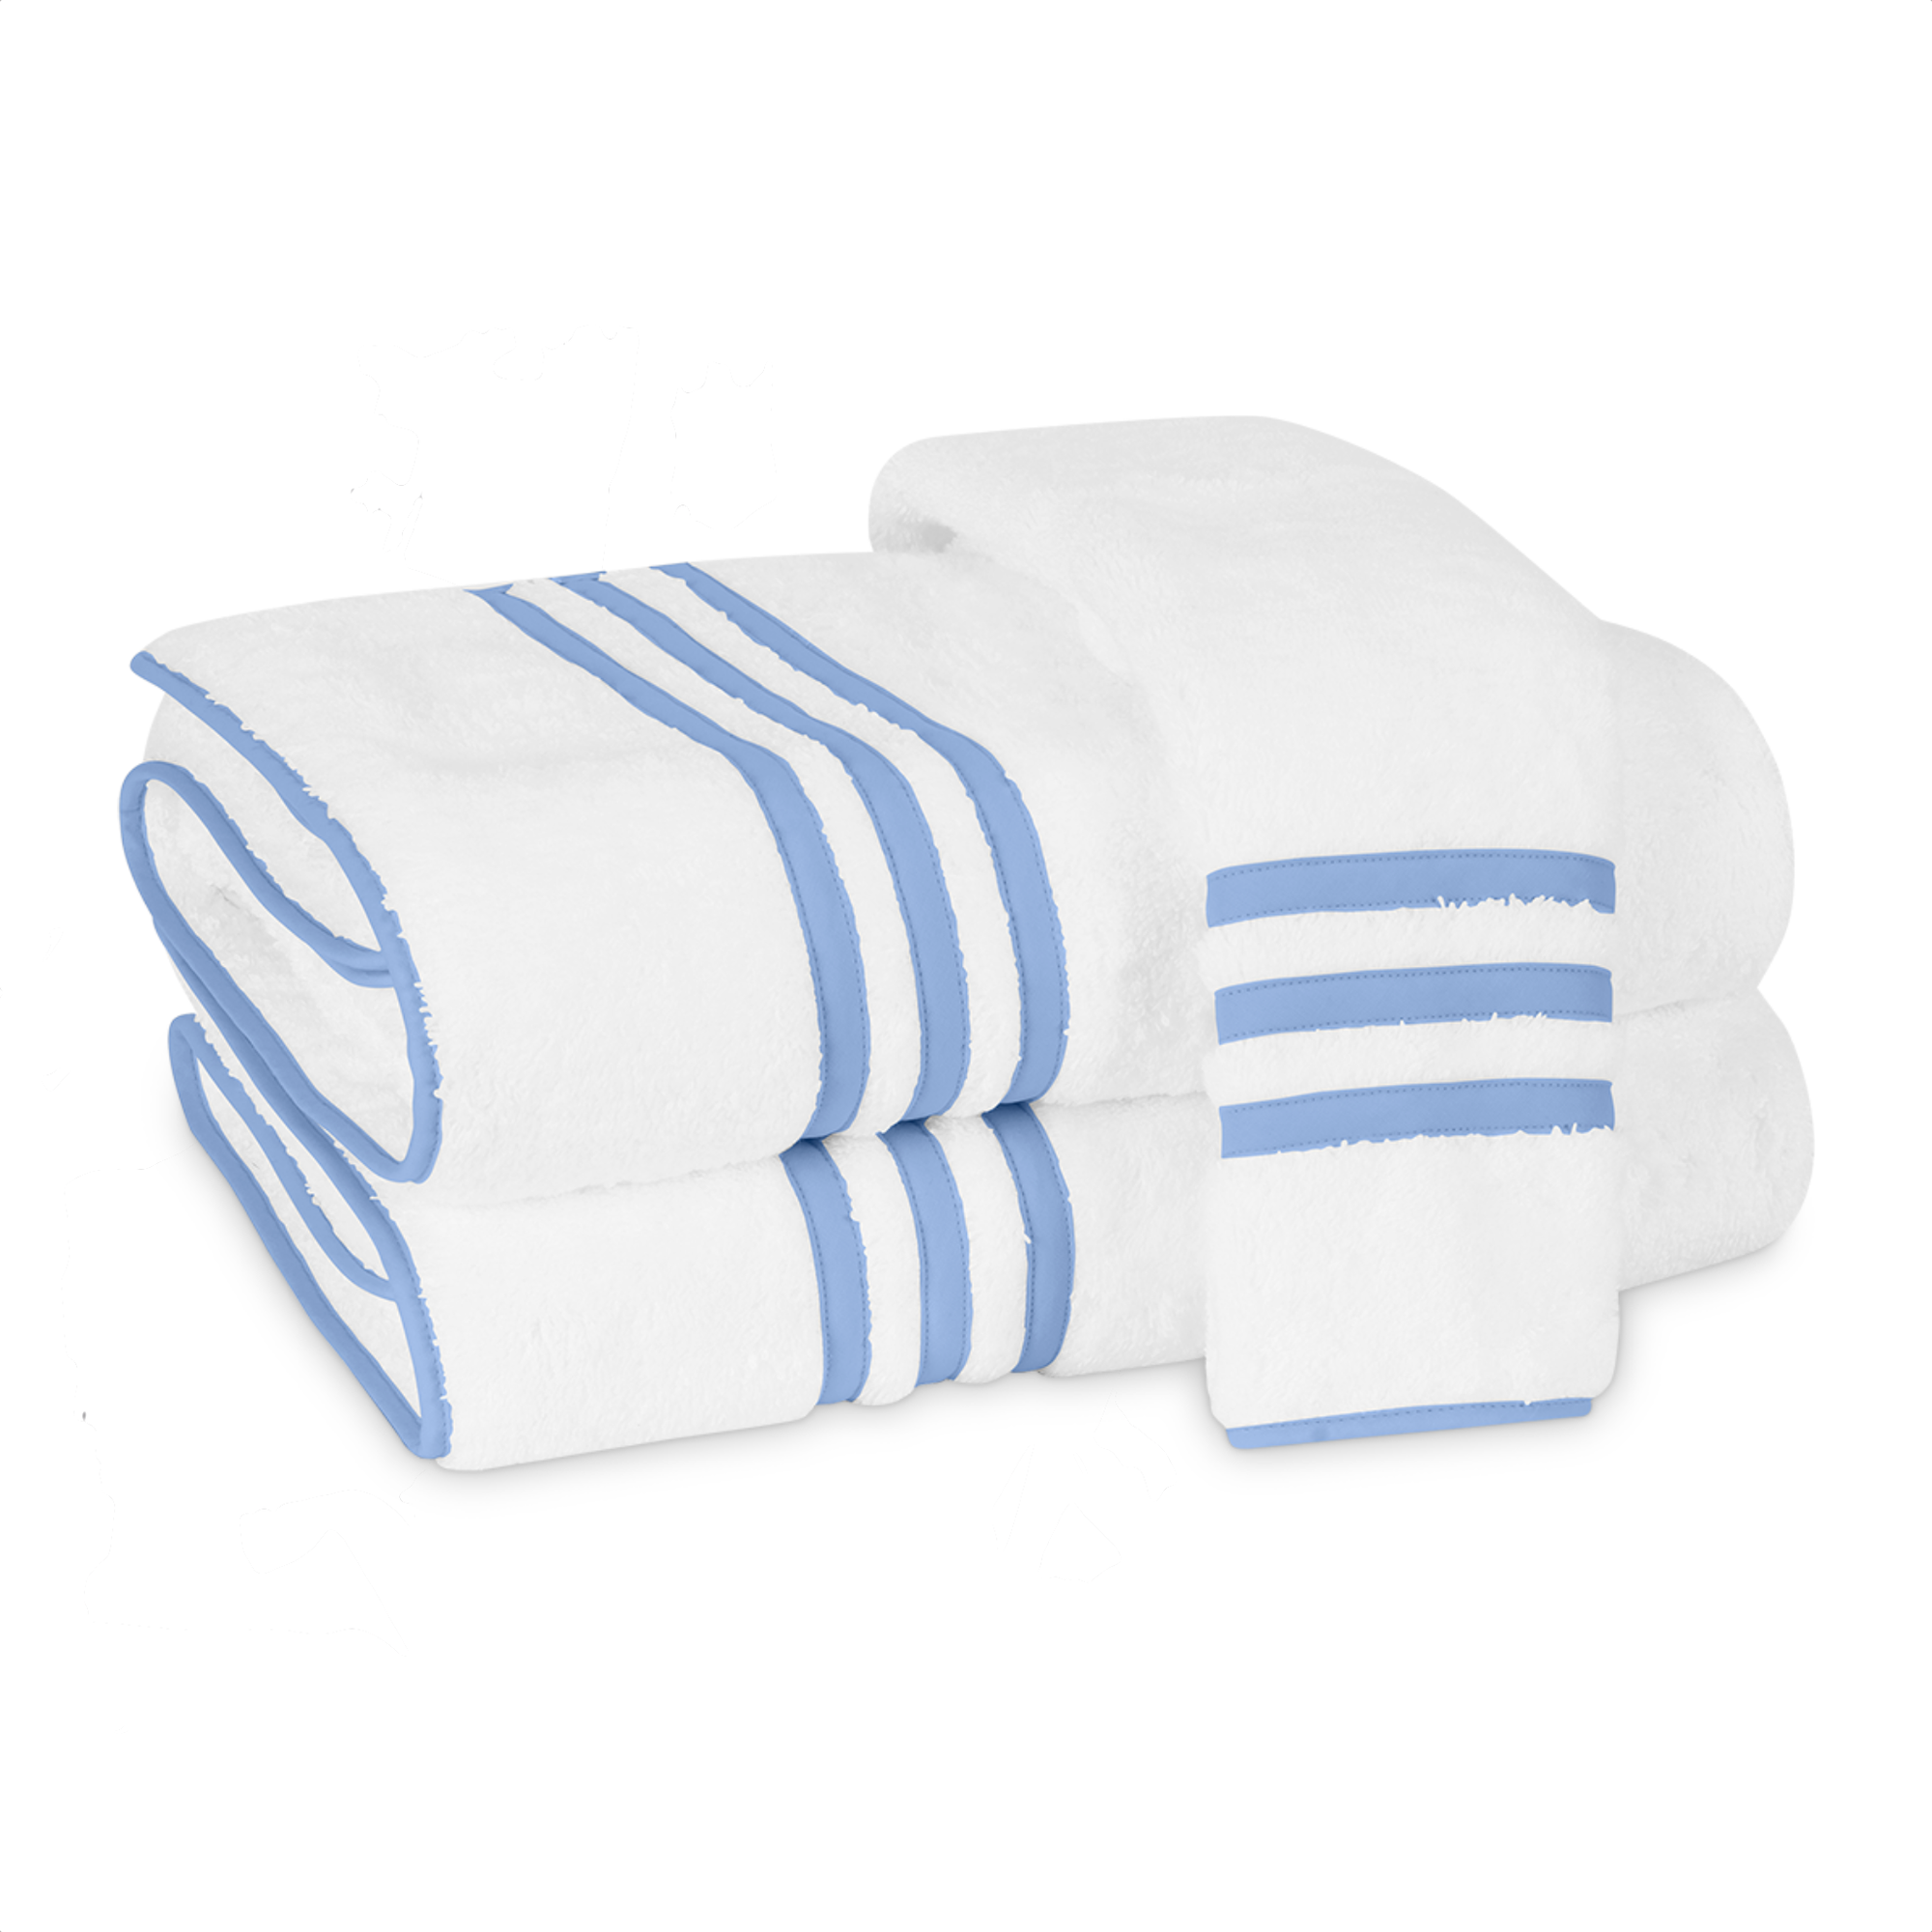 Folded Matouk Newport Bath Towels in Azure Color